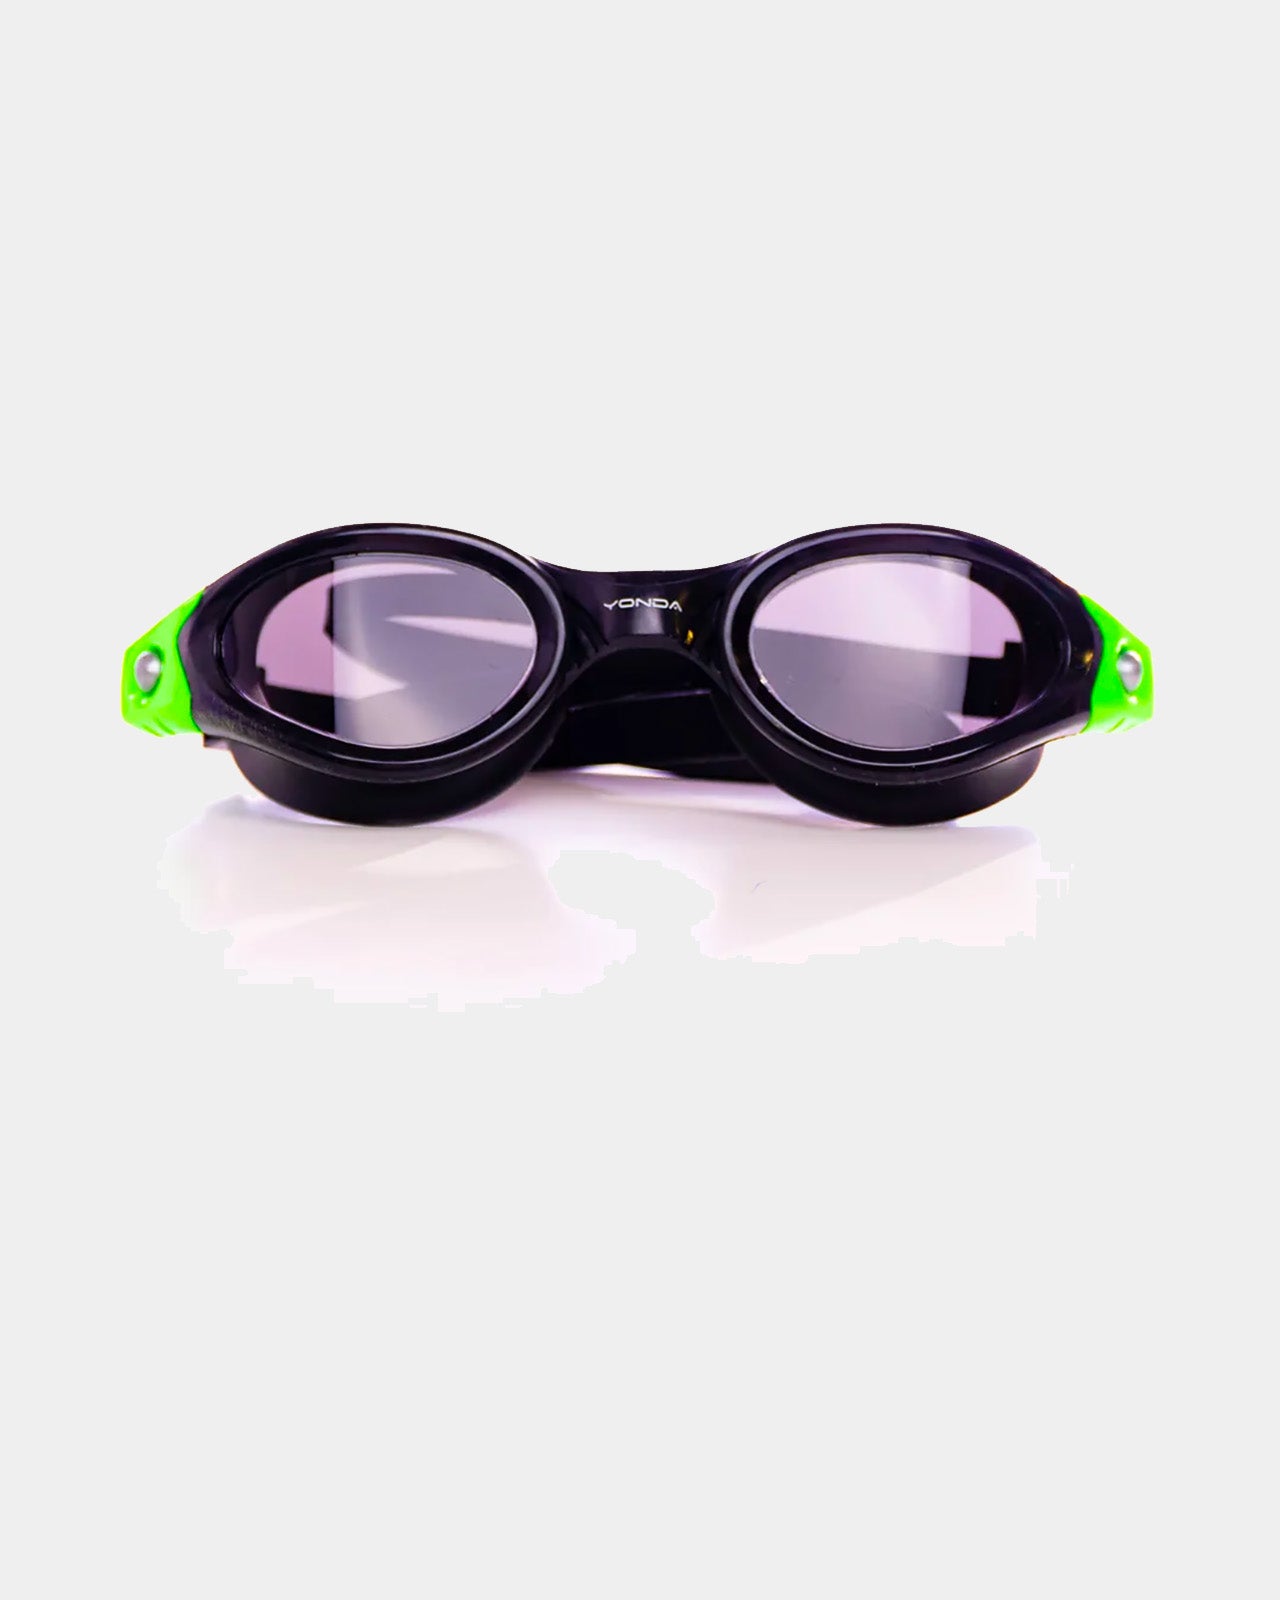 Yonda Hydroglide Polarised Triathlon & Open Water Swimming Goggles